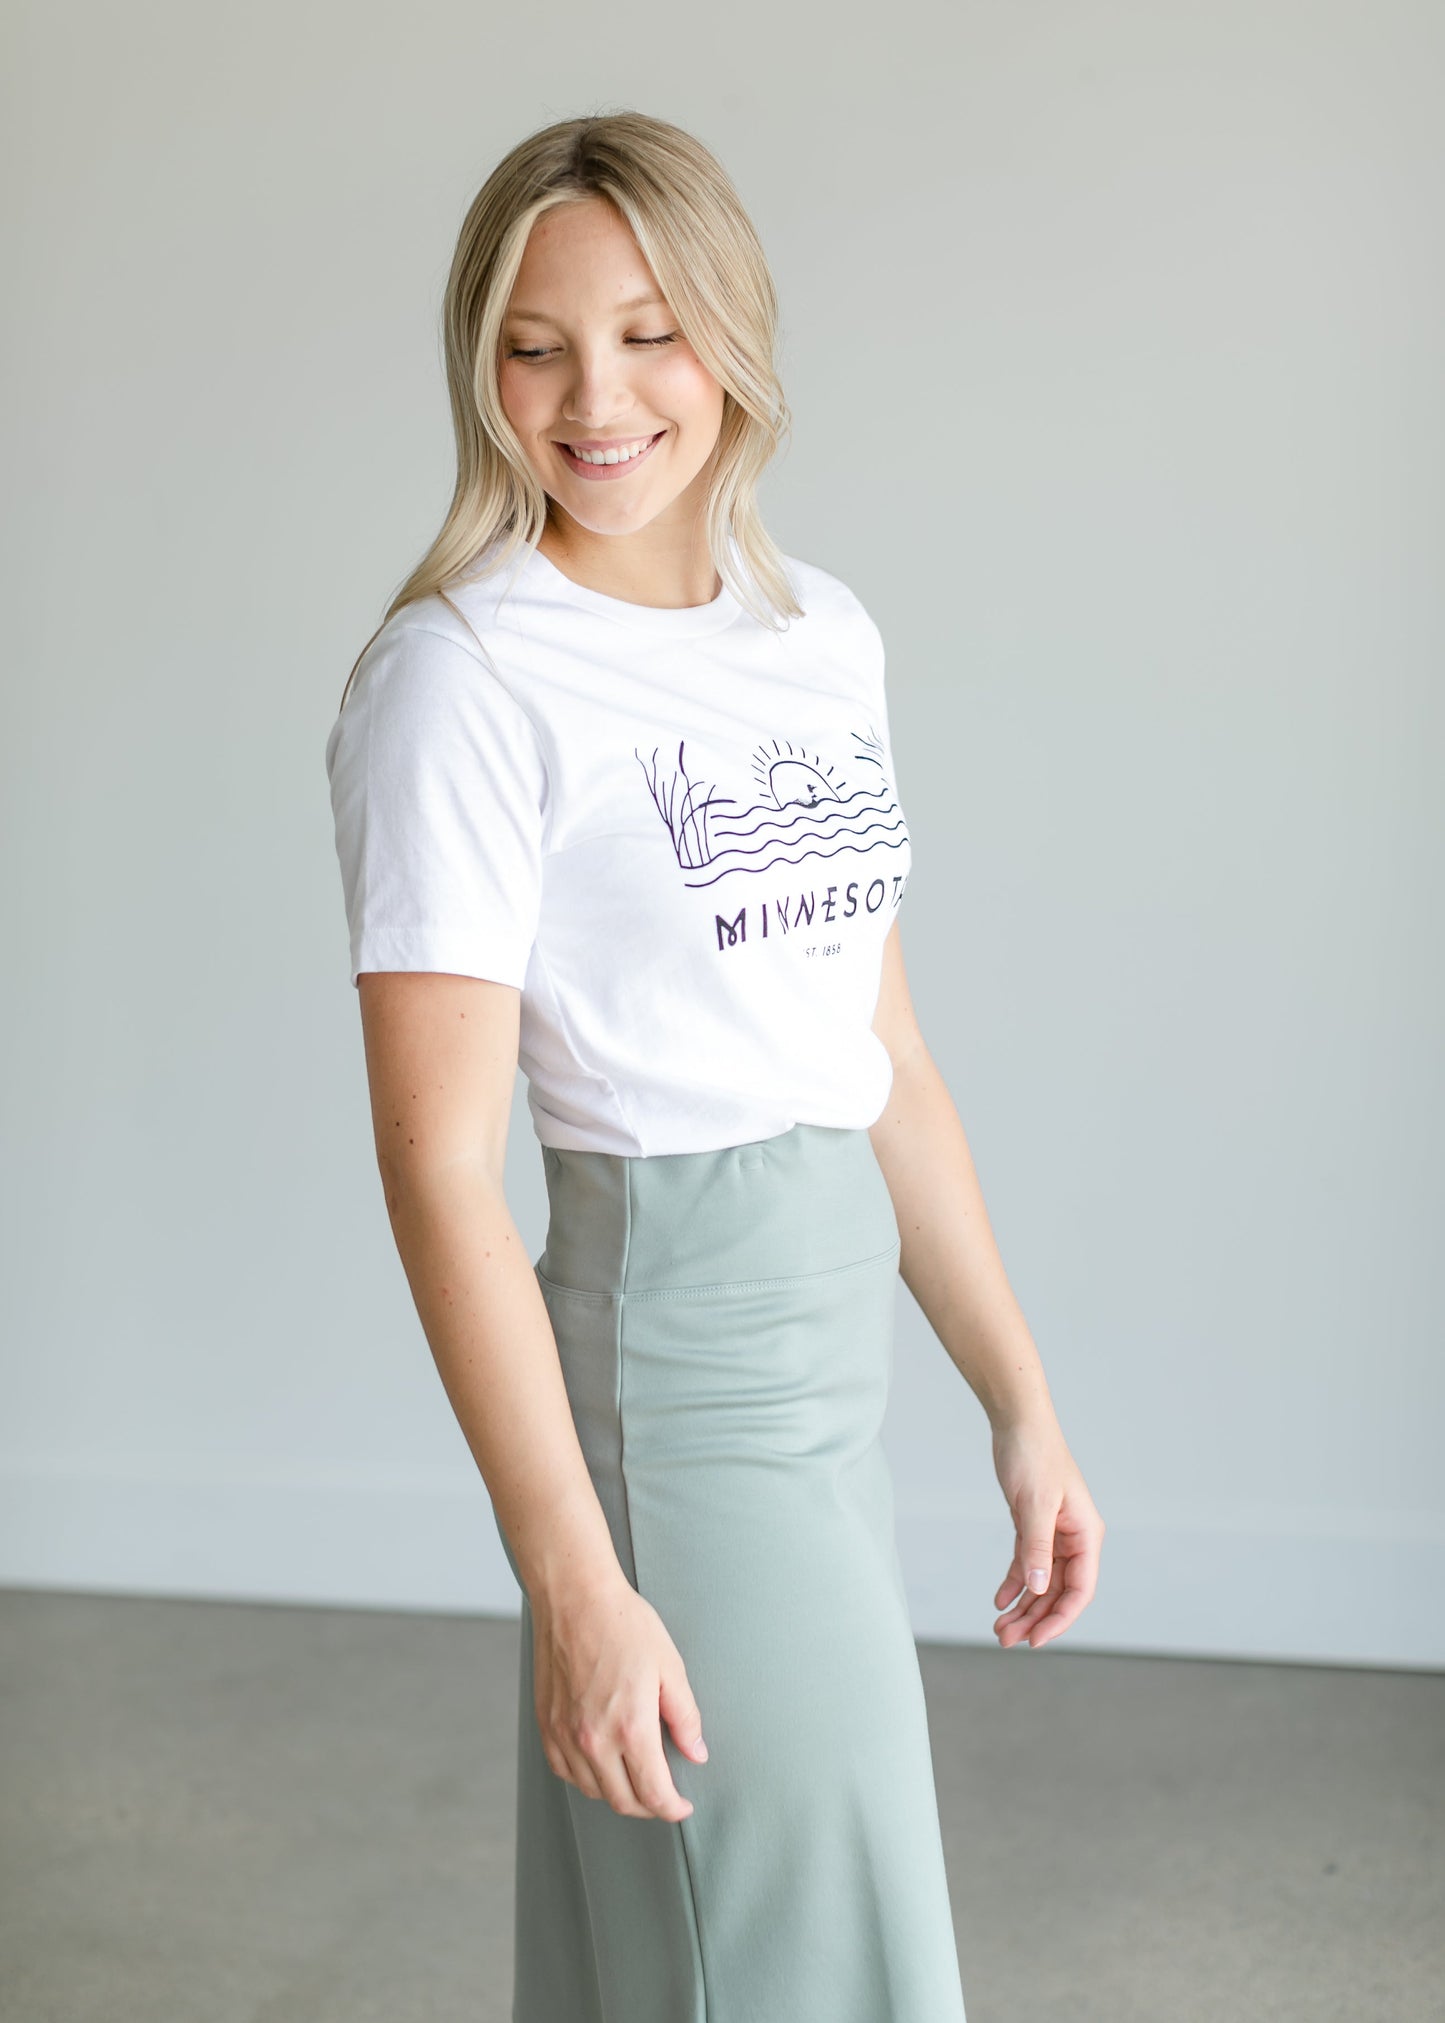 Minnesota Loon Short Sleeve T-shirt Tops